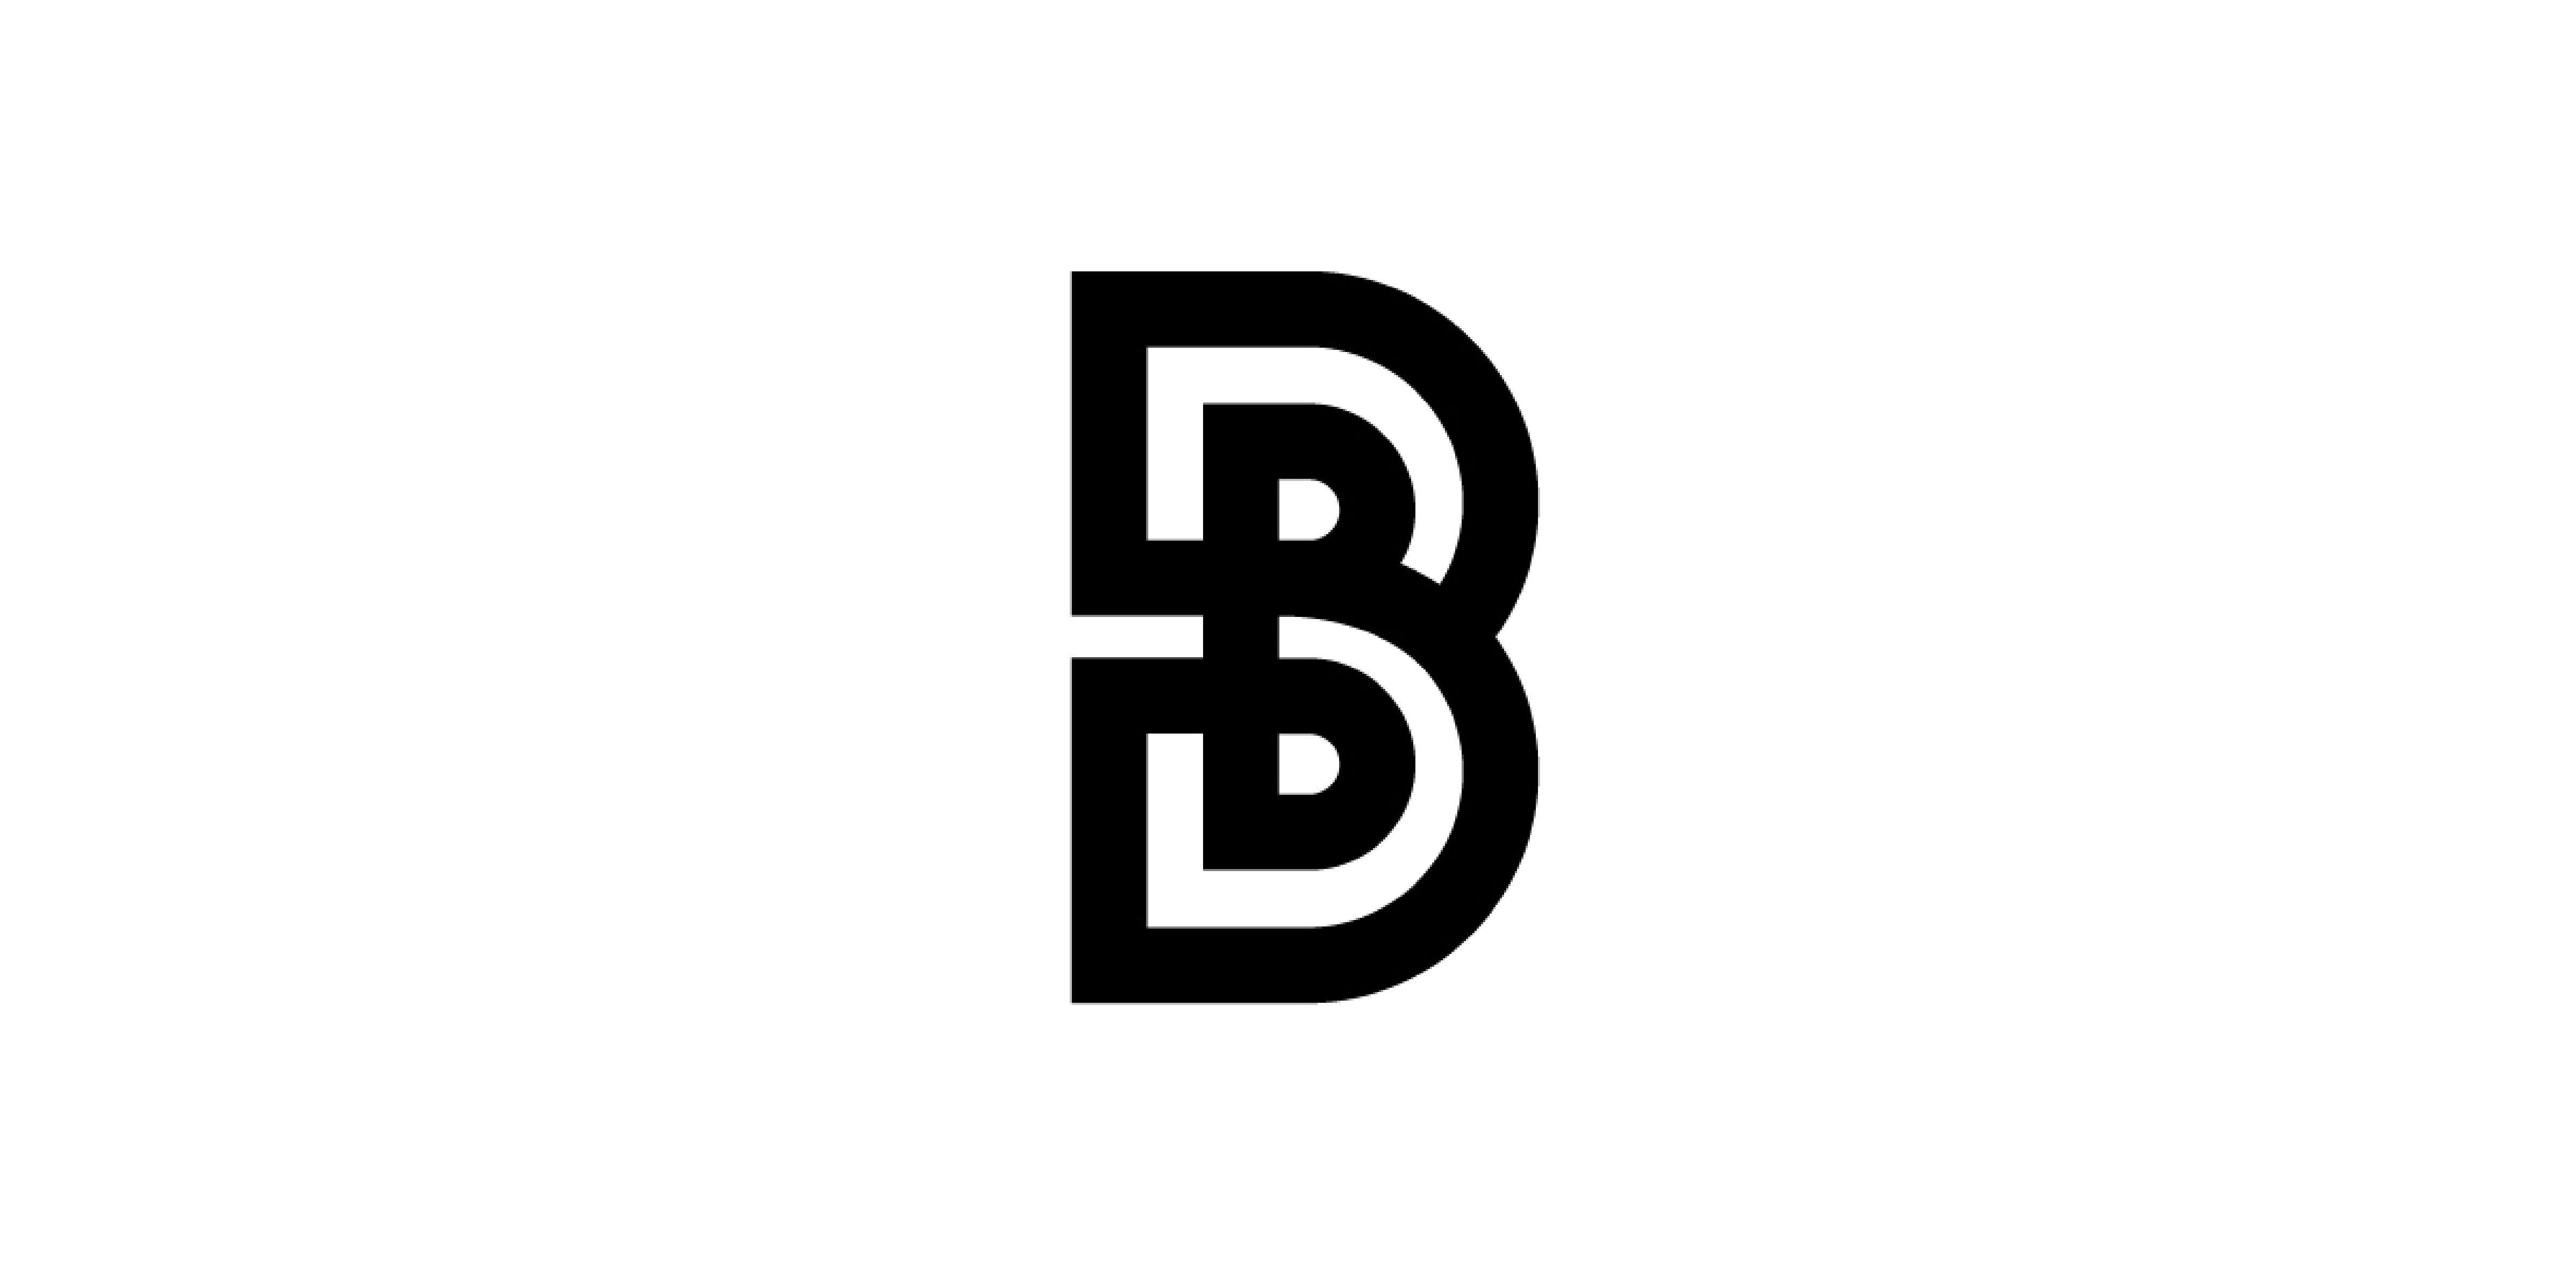 With a White B Logo - logo letter b design grid symbol mark